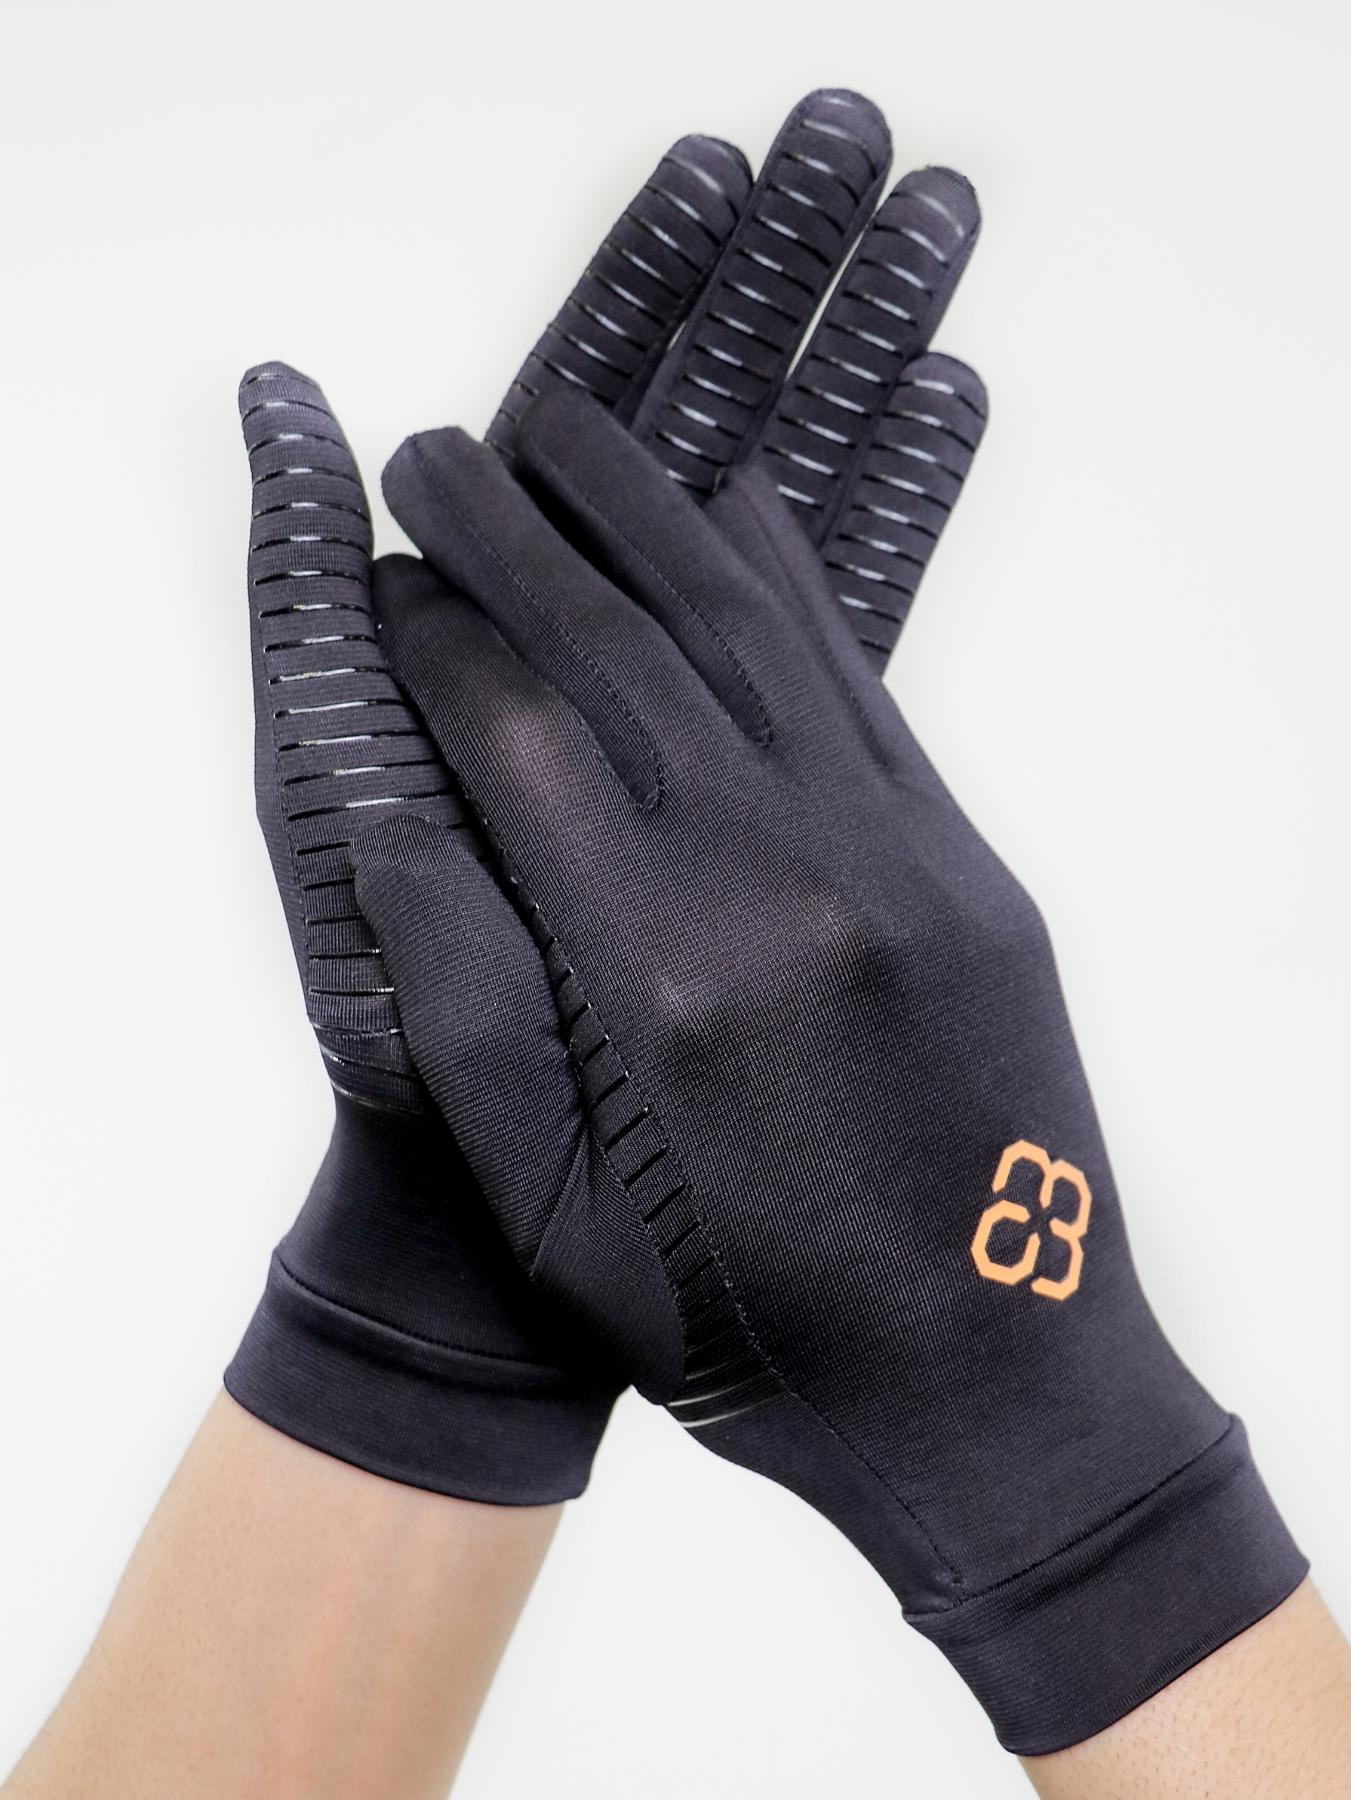 Copper Compression Full Gloves - Unisex